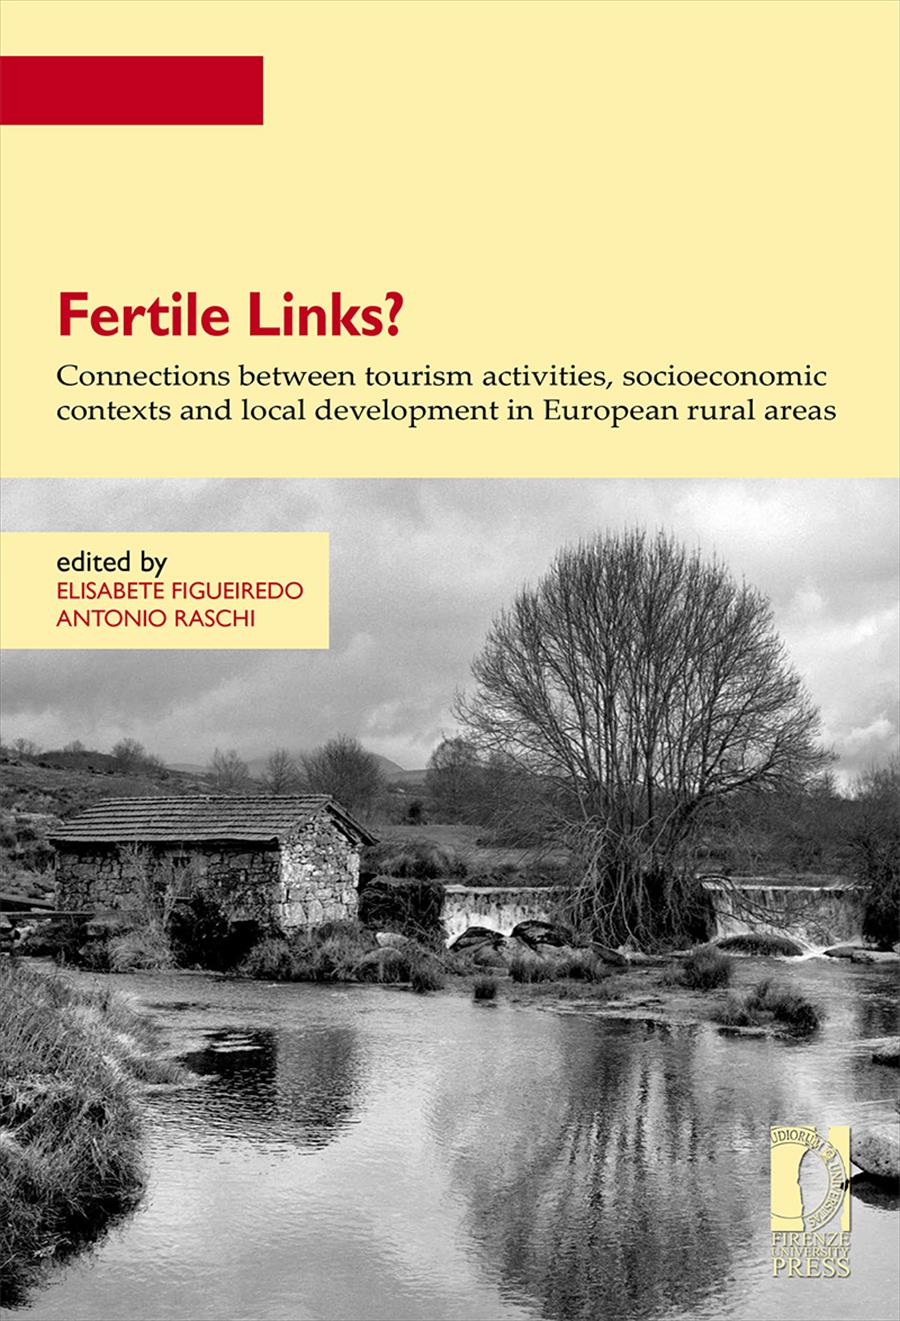 Fertile Links? Connections between tourism activities, socioeconomic contexts and local development in European rural areas